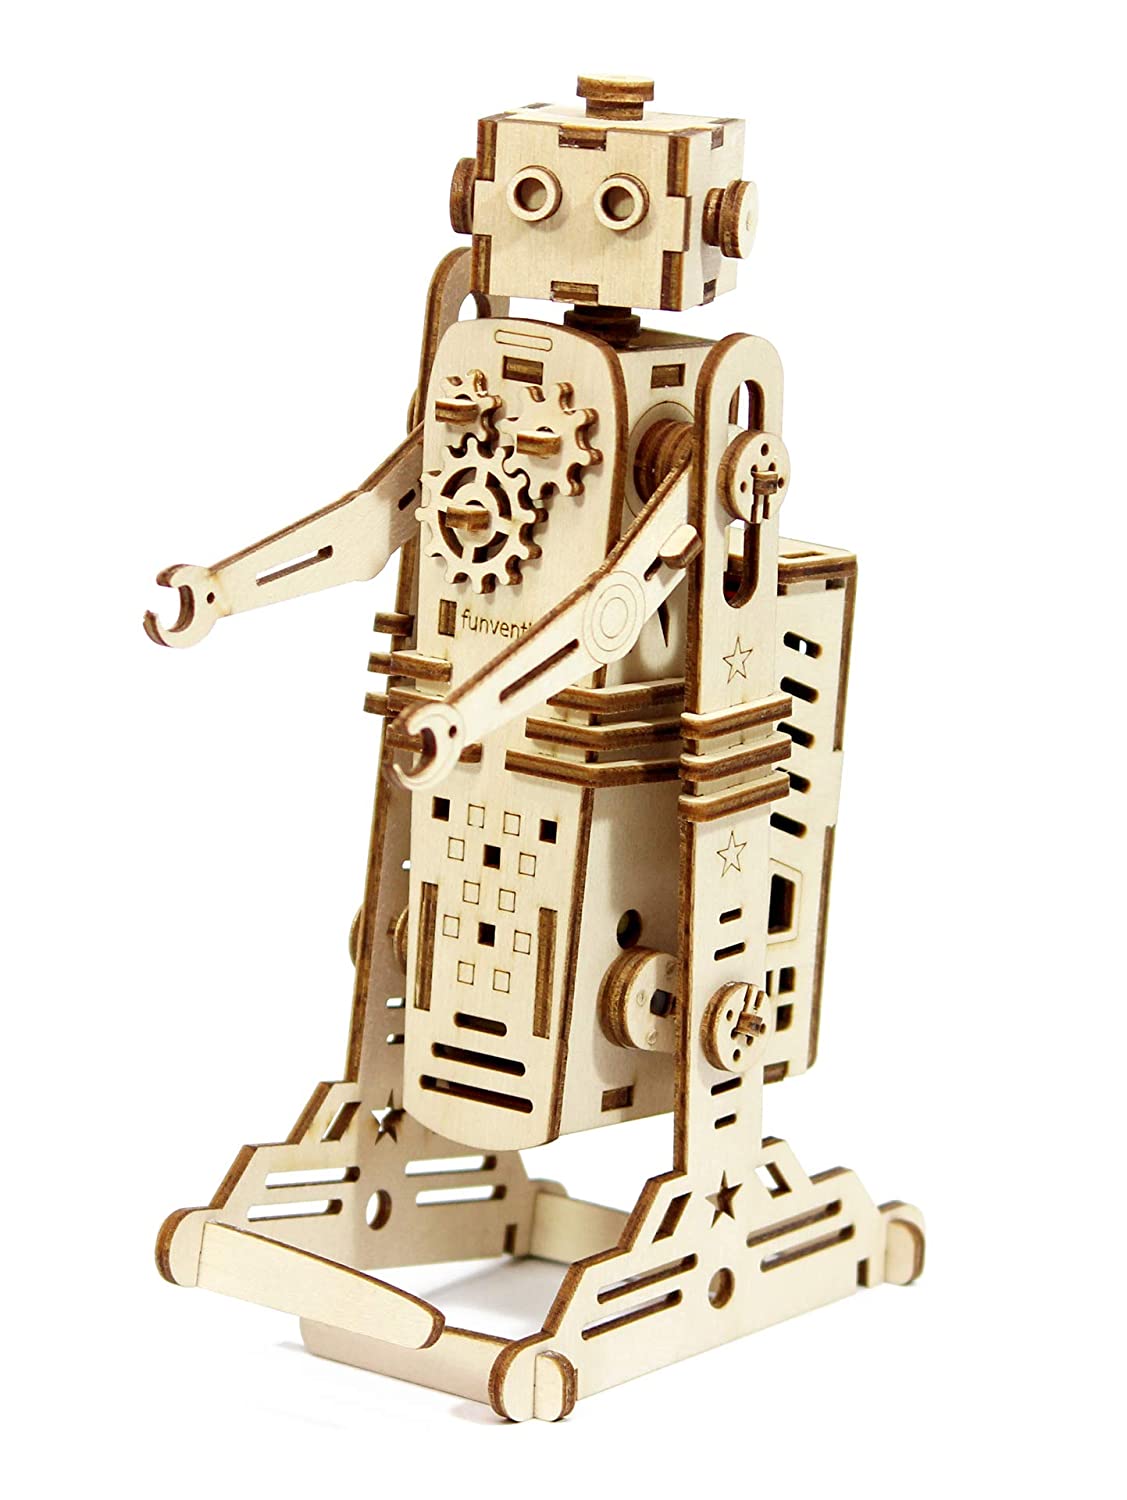 i-ROBOT - DIY Walking Robot Mechanical Model | Funvention - Krazy Caterpillar 